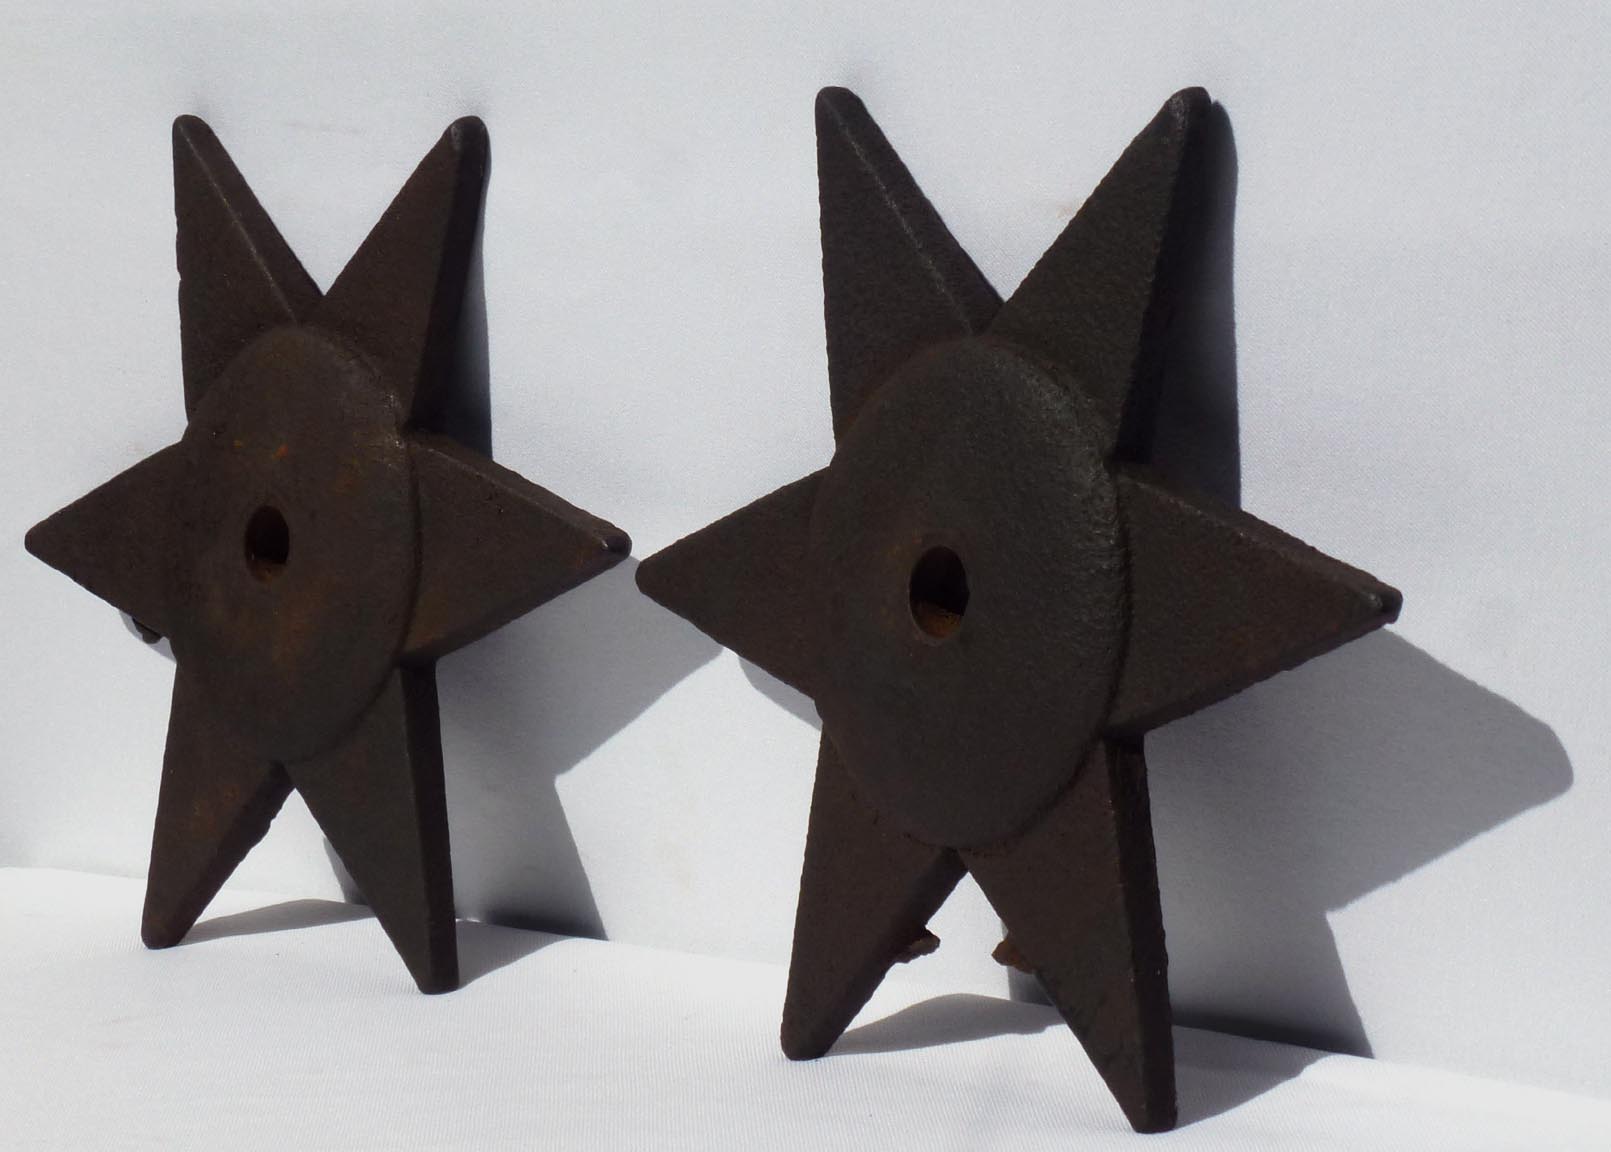 Cast iron architectural star tie-ins